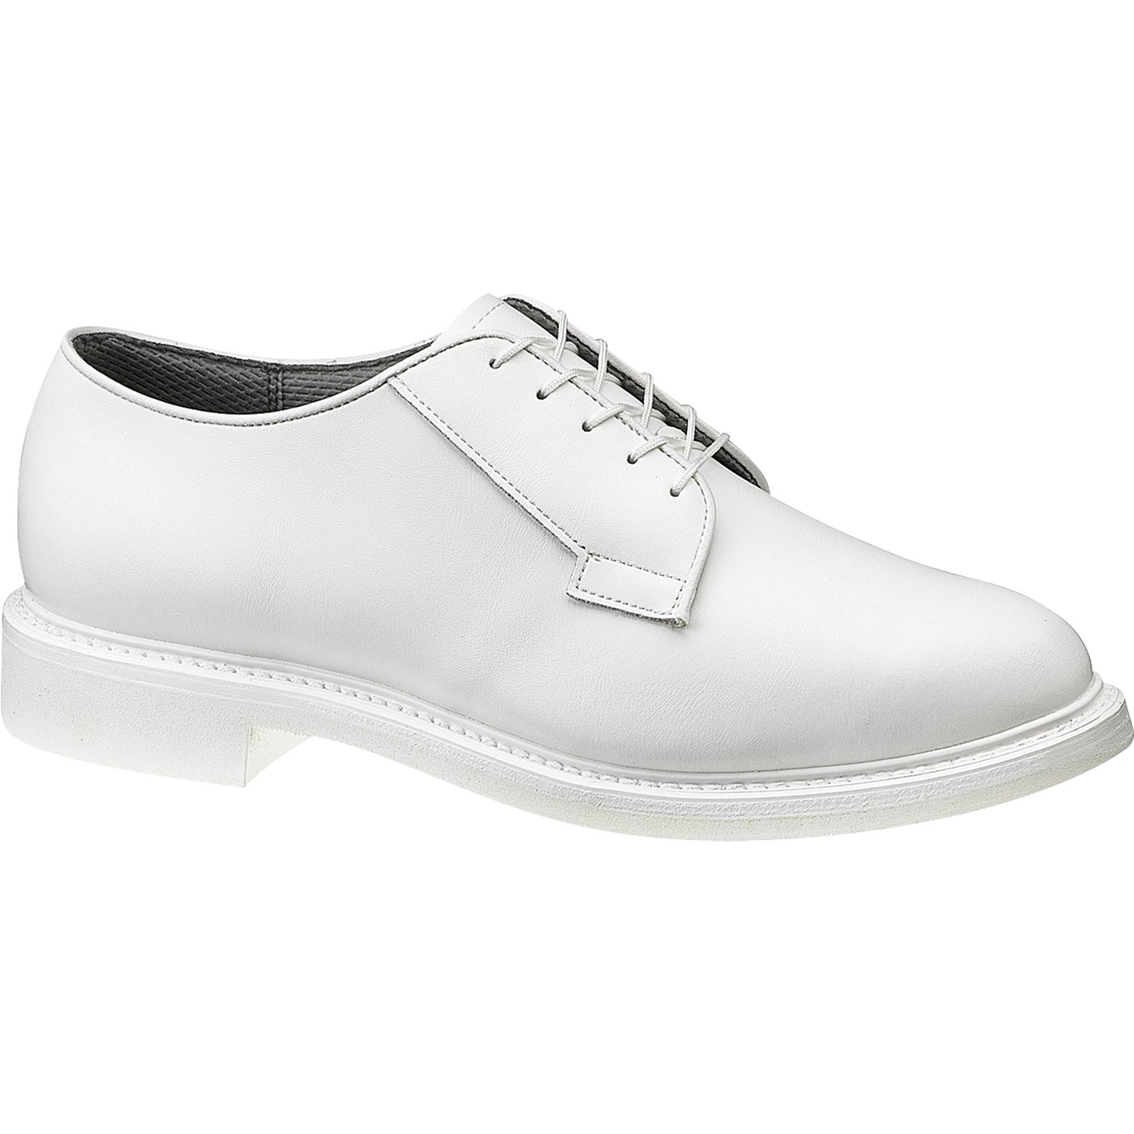 Bates Women's Lites Shoe,White,5.5 M US 